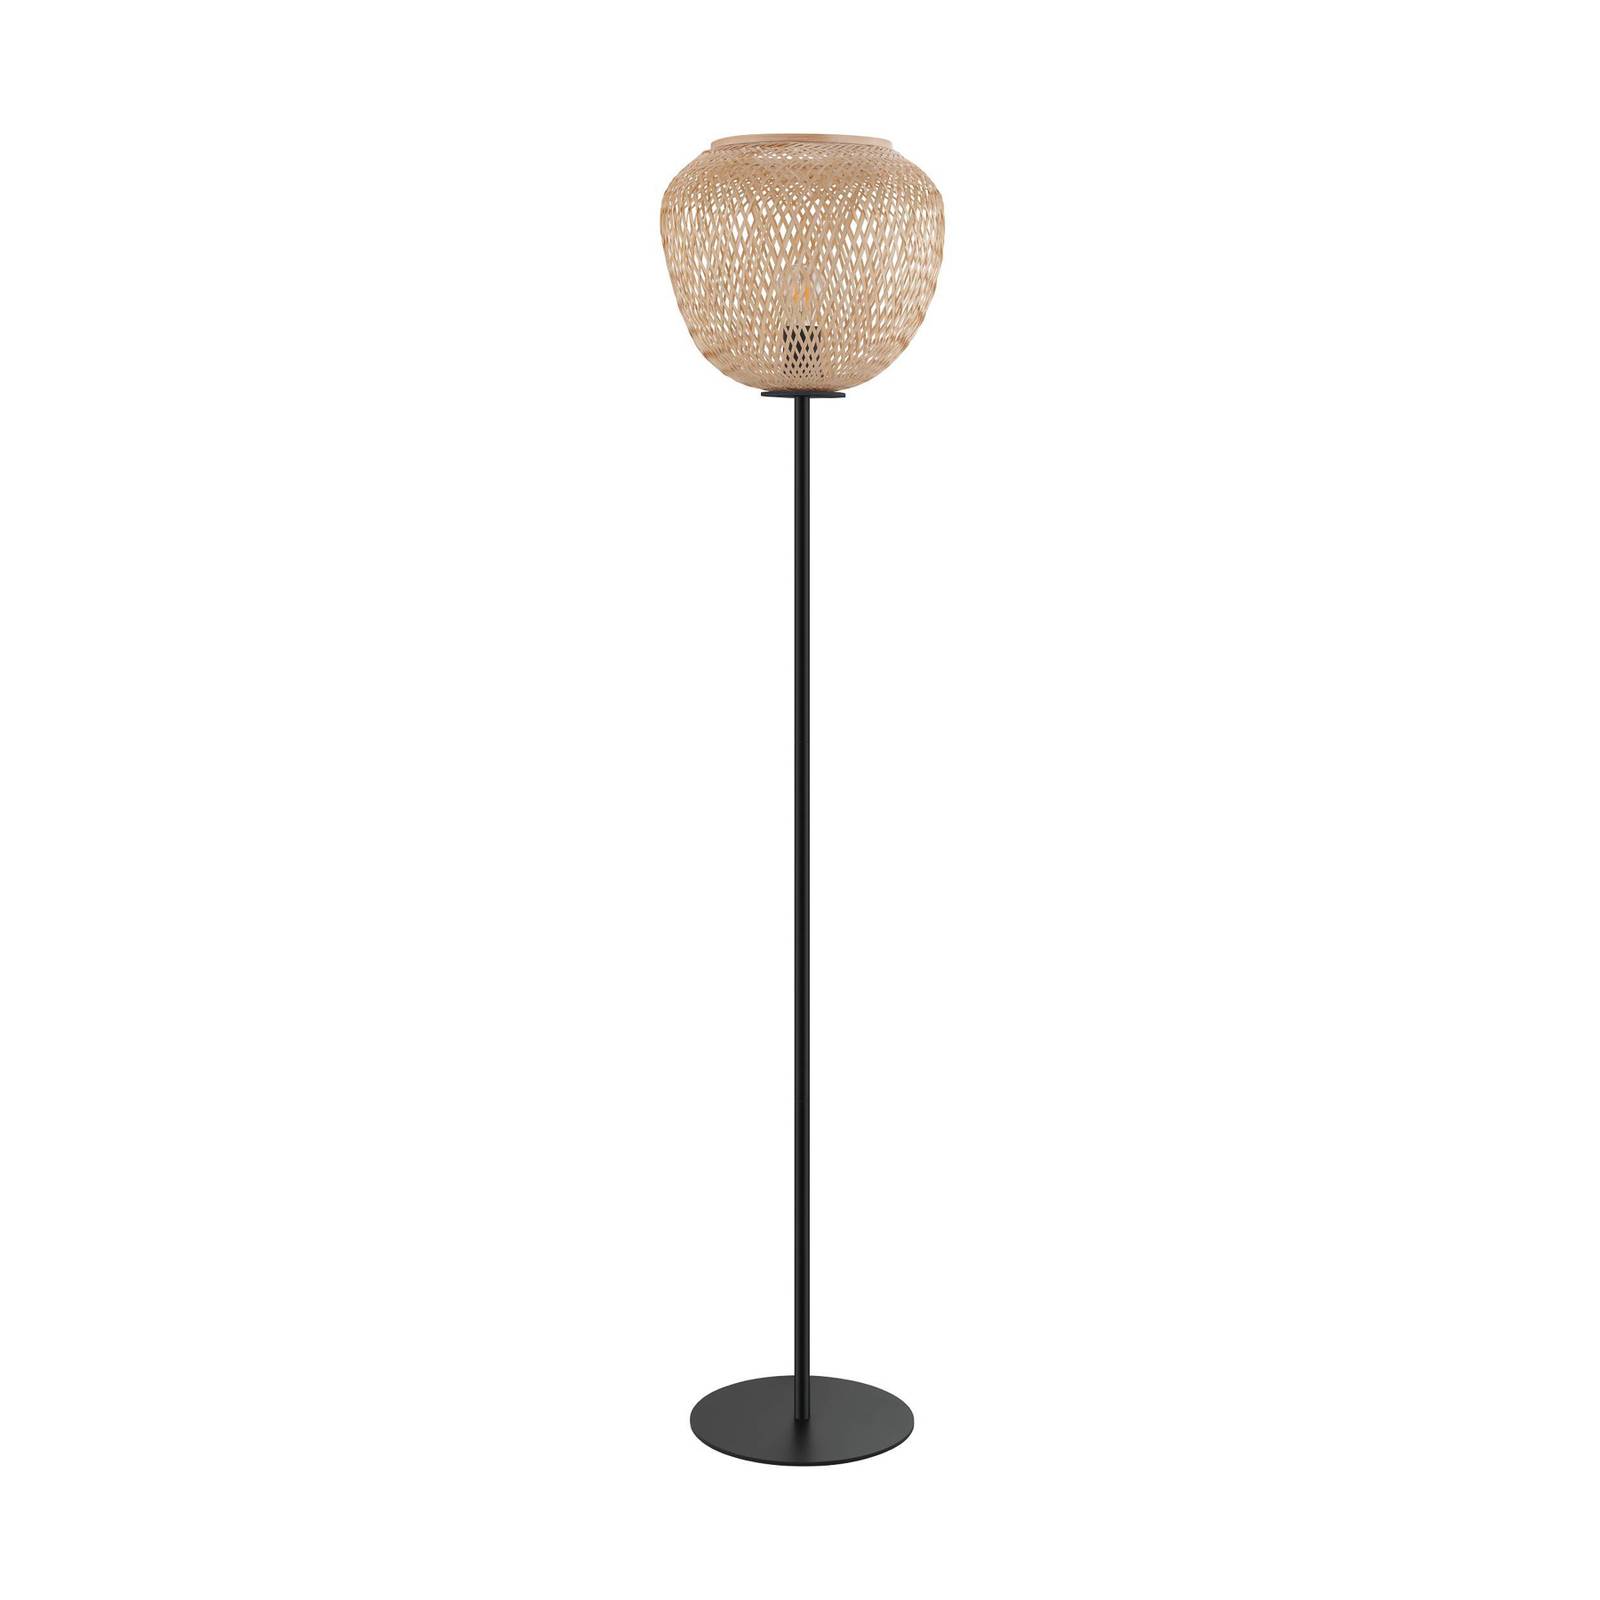 EGLO Dembleby floor lamp in natural wood